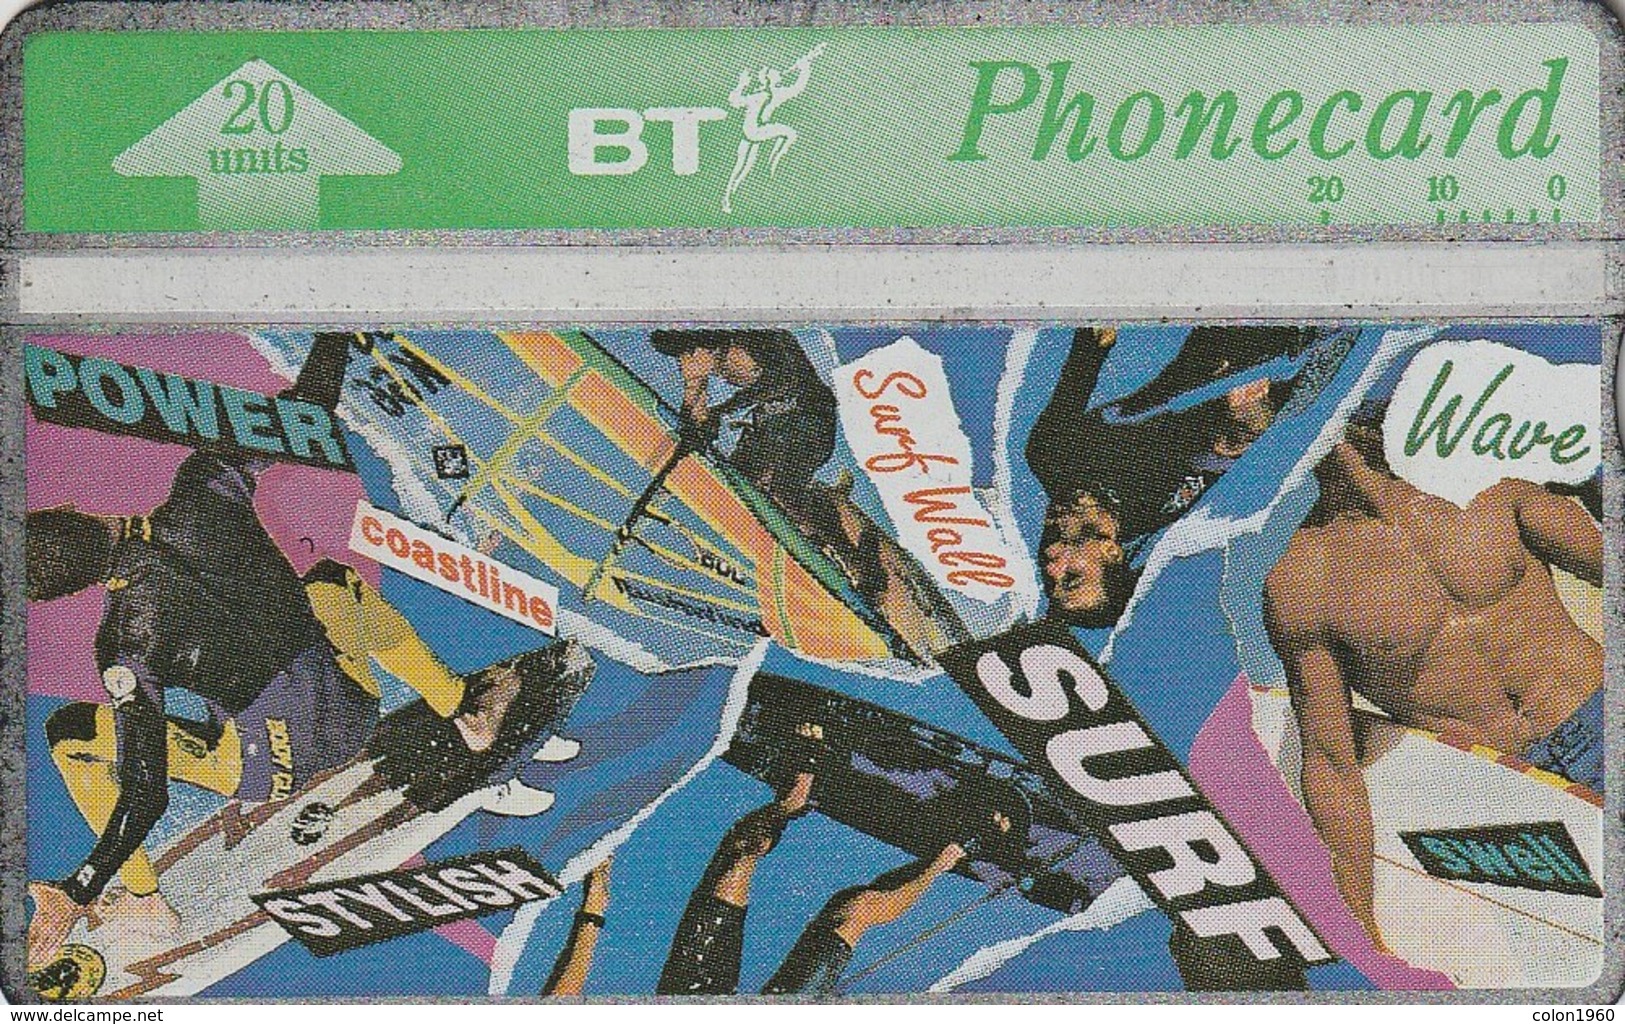 REINO UNIDO. SPORTS. Youth Series - Surf. 07/1993. 307K. BTC-089. (610) - Sport